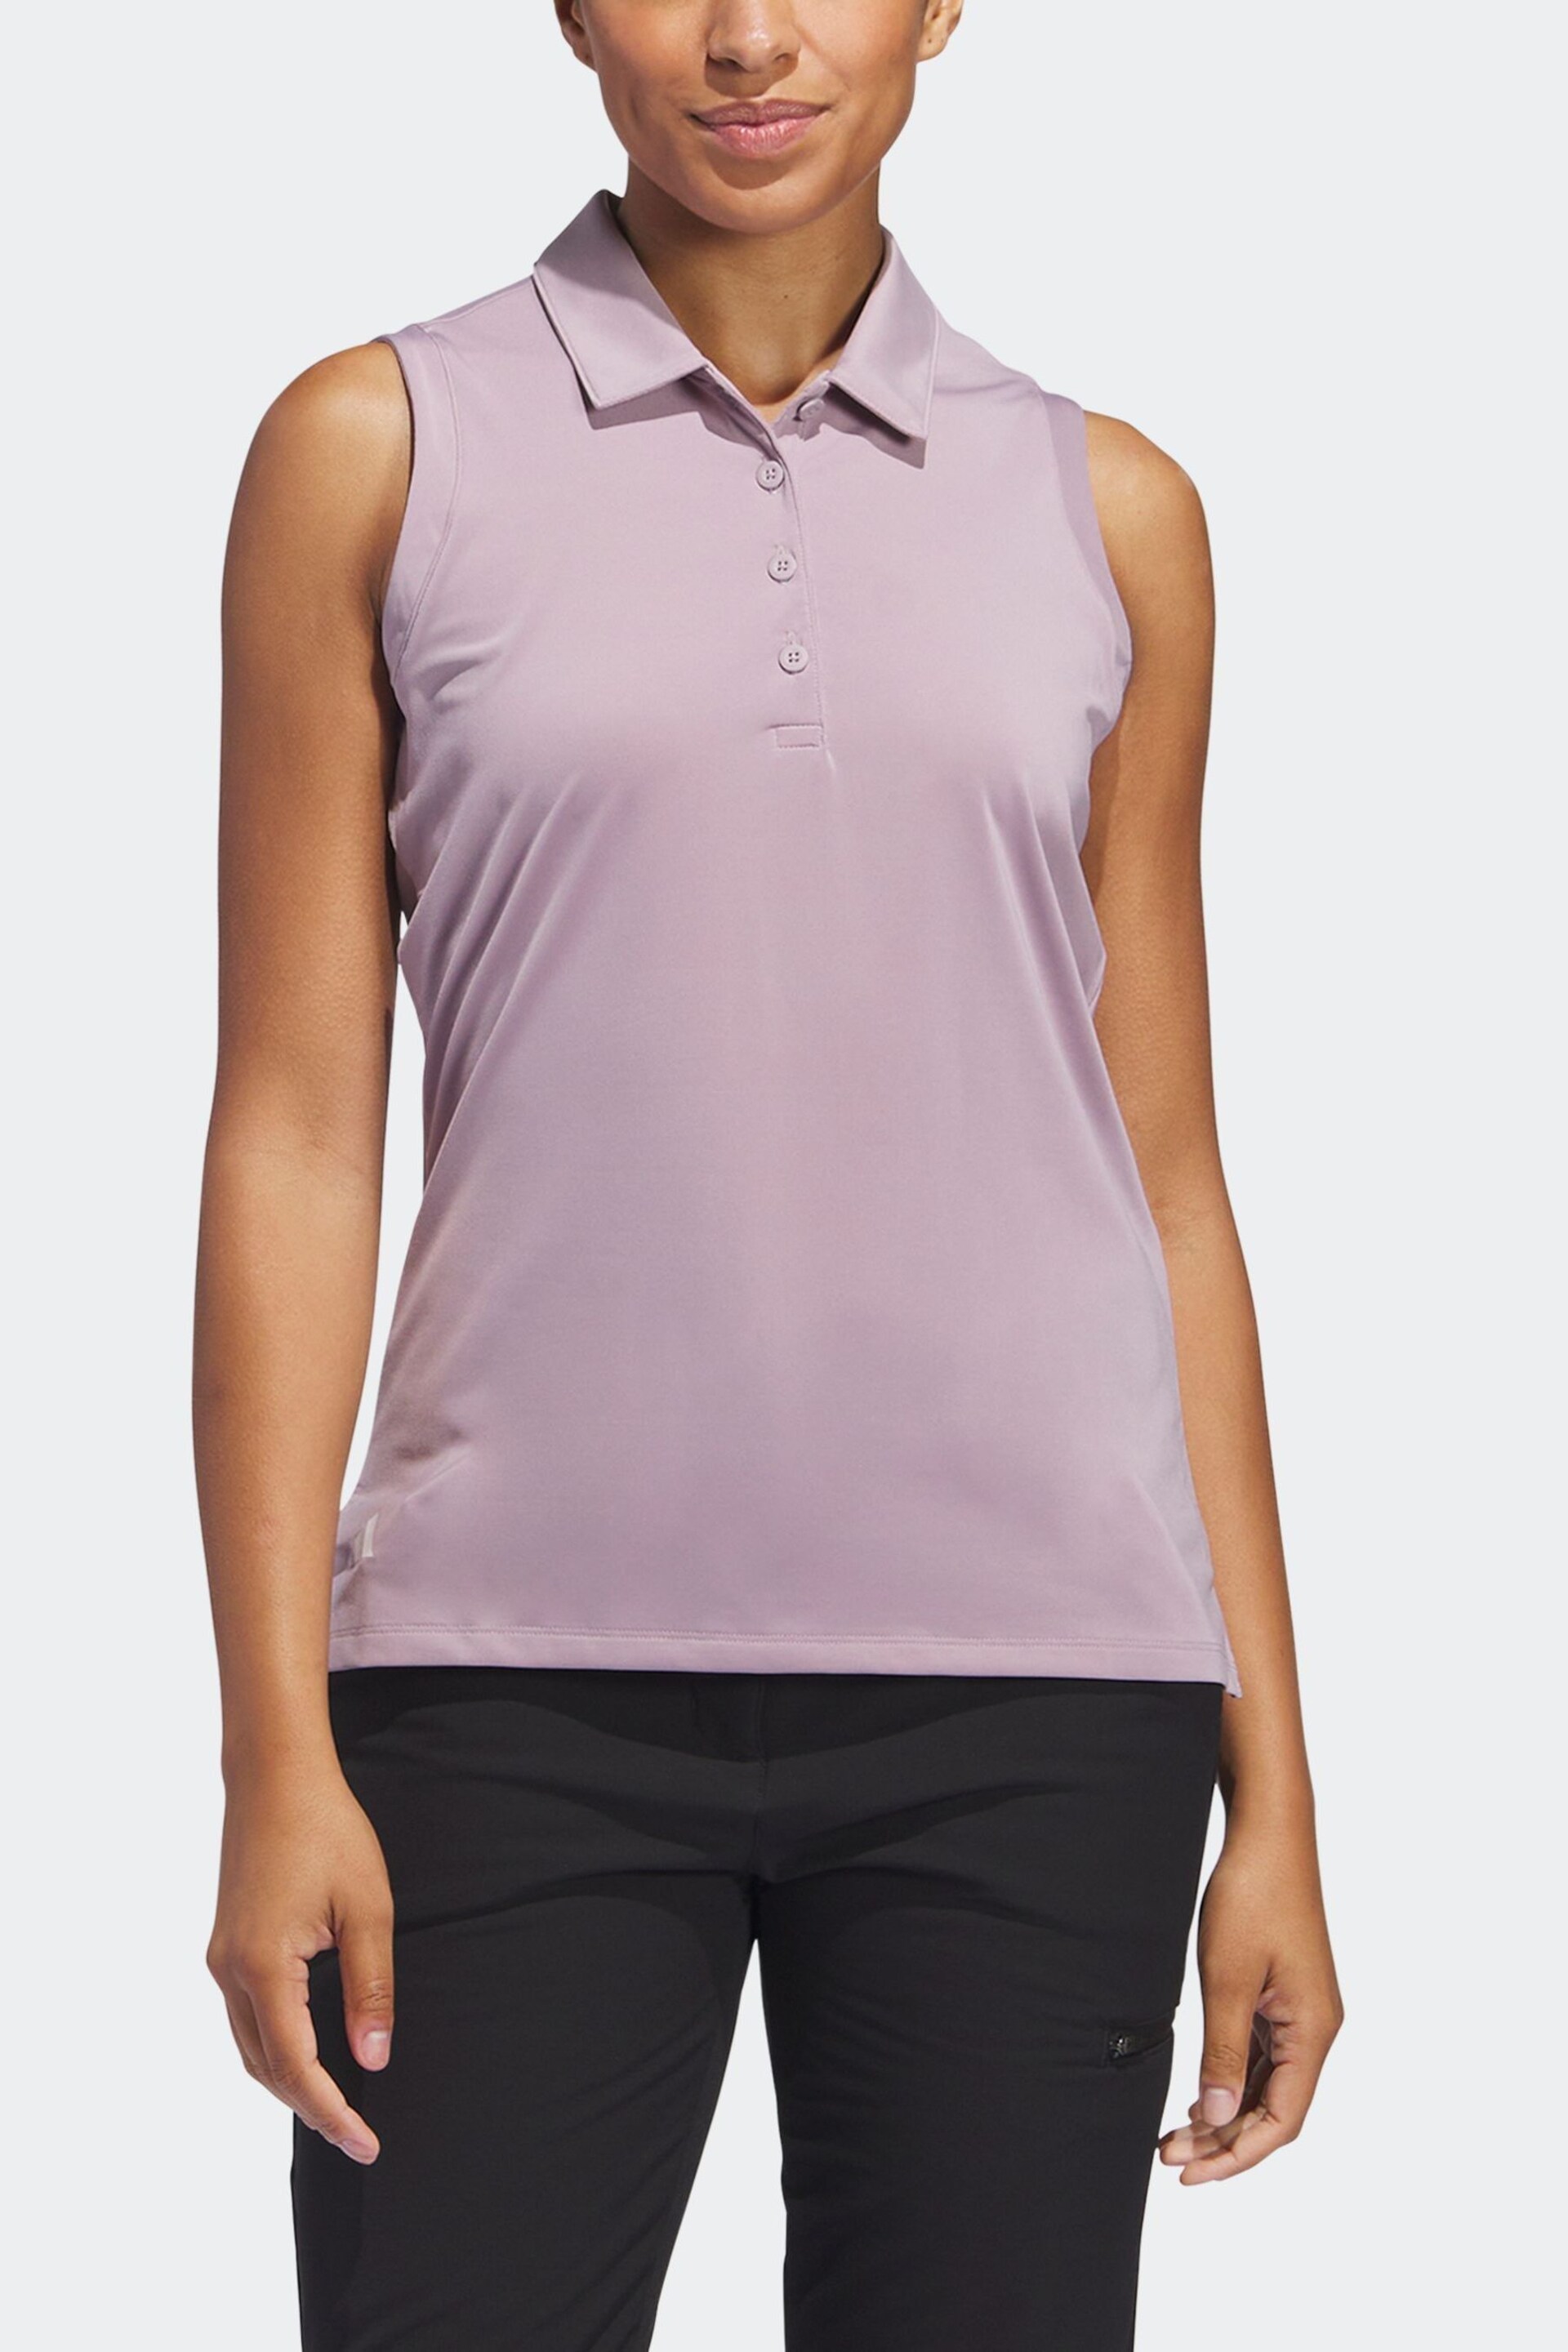 adidas Golf Ultimate365 Solid Sleeveless Polo Shirt - Image 4 of 7